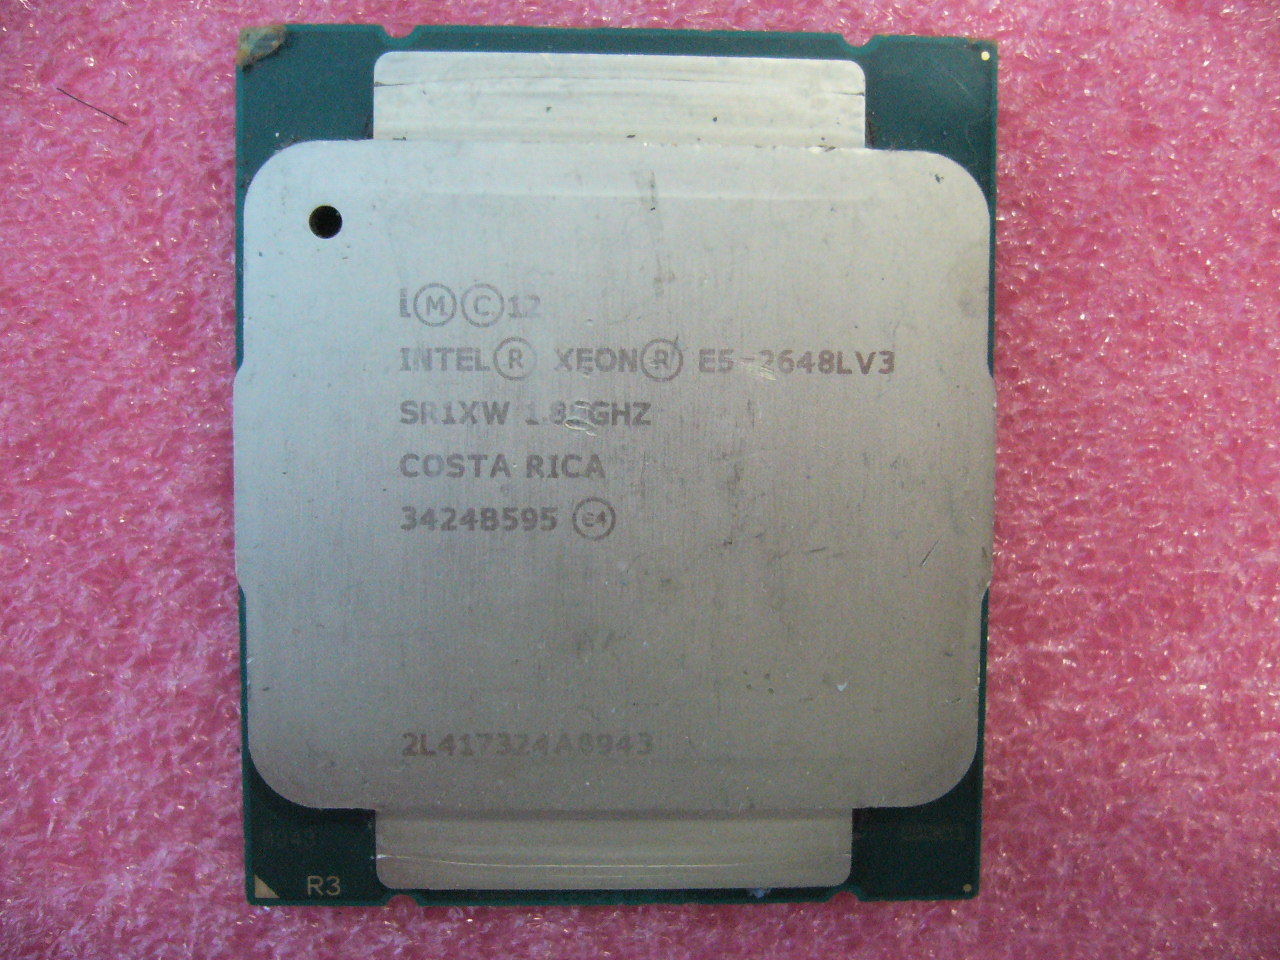 QTY 1x Intel Xeon CPU E5-2648LV3 12-Cores 1.8Ghz LGA2011 TDP 70W SR1XW